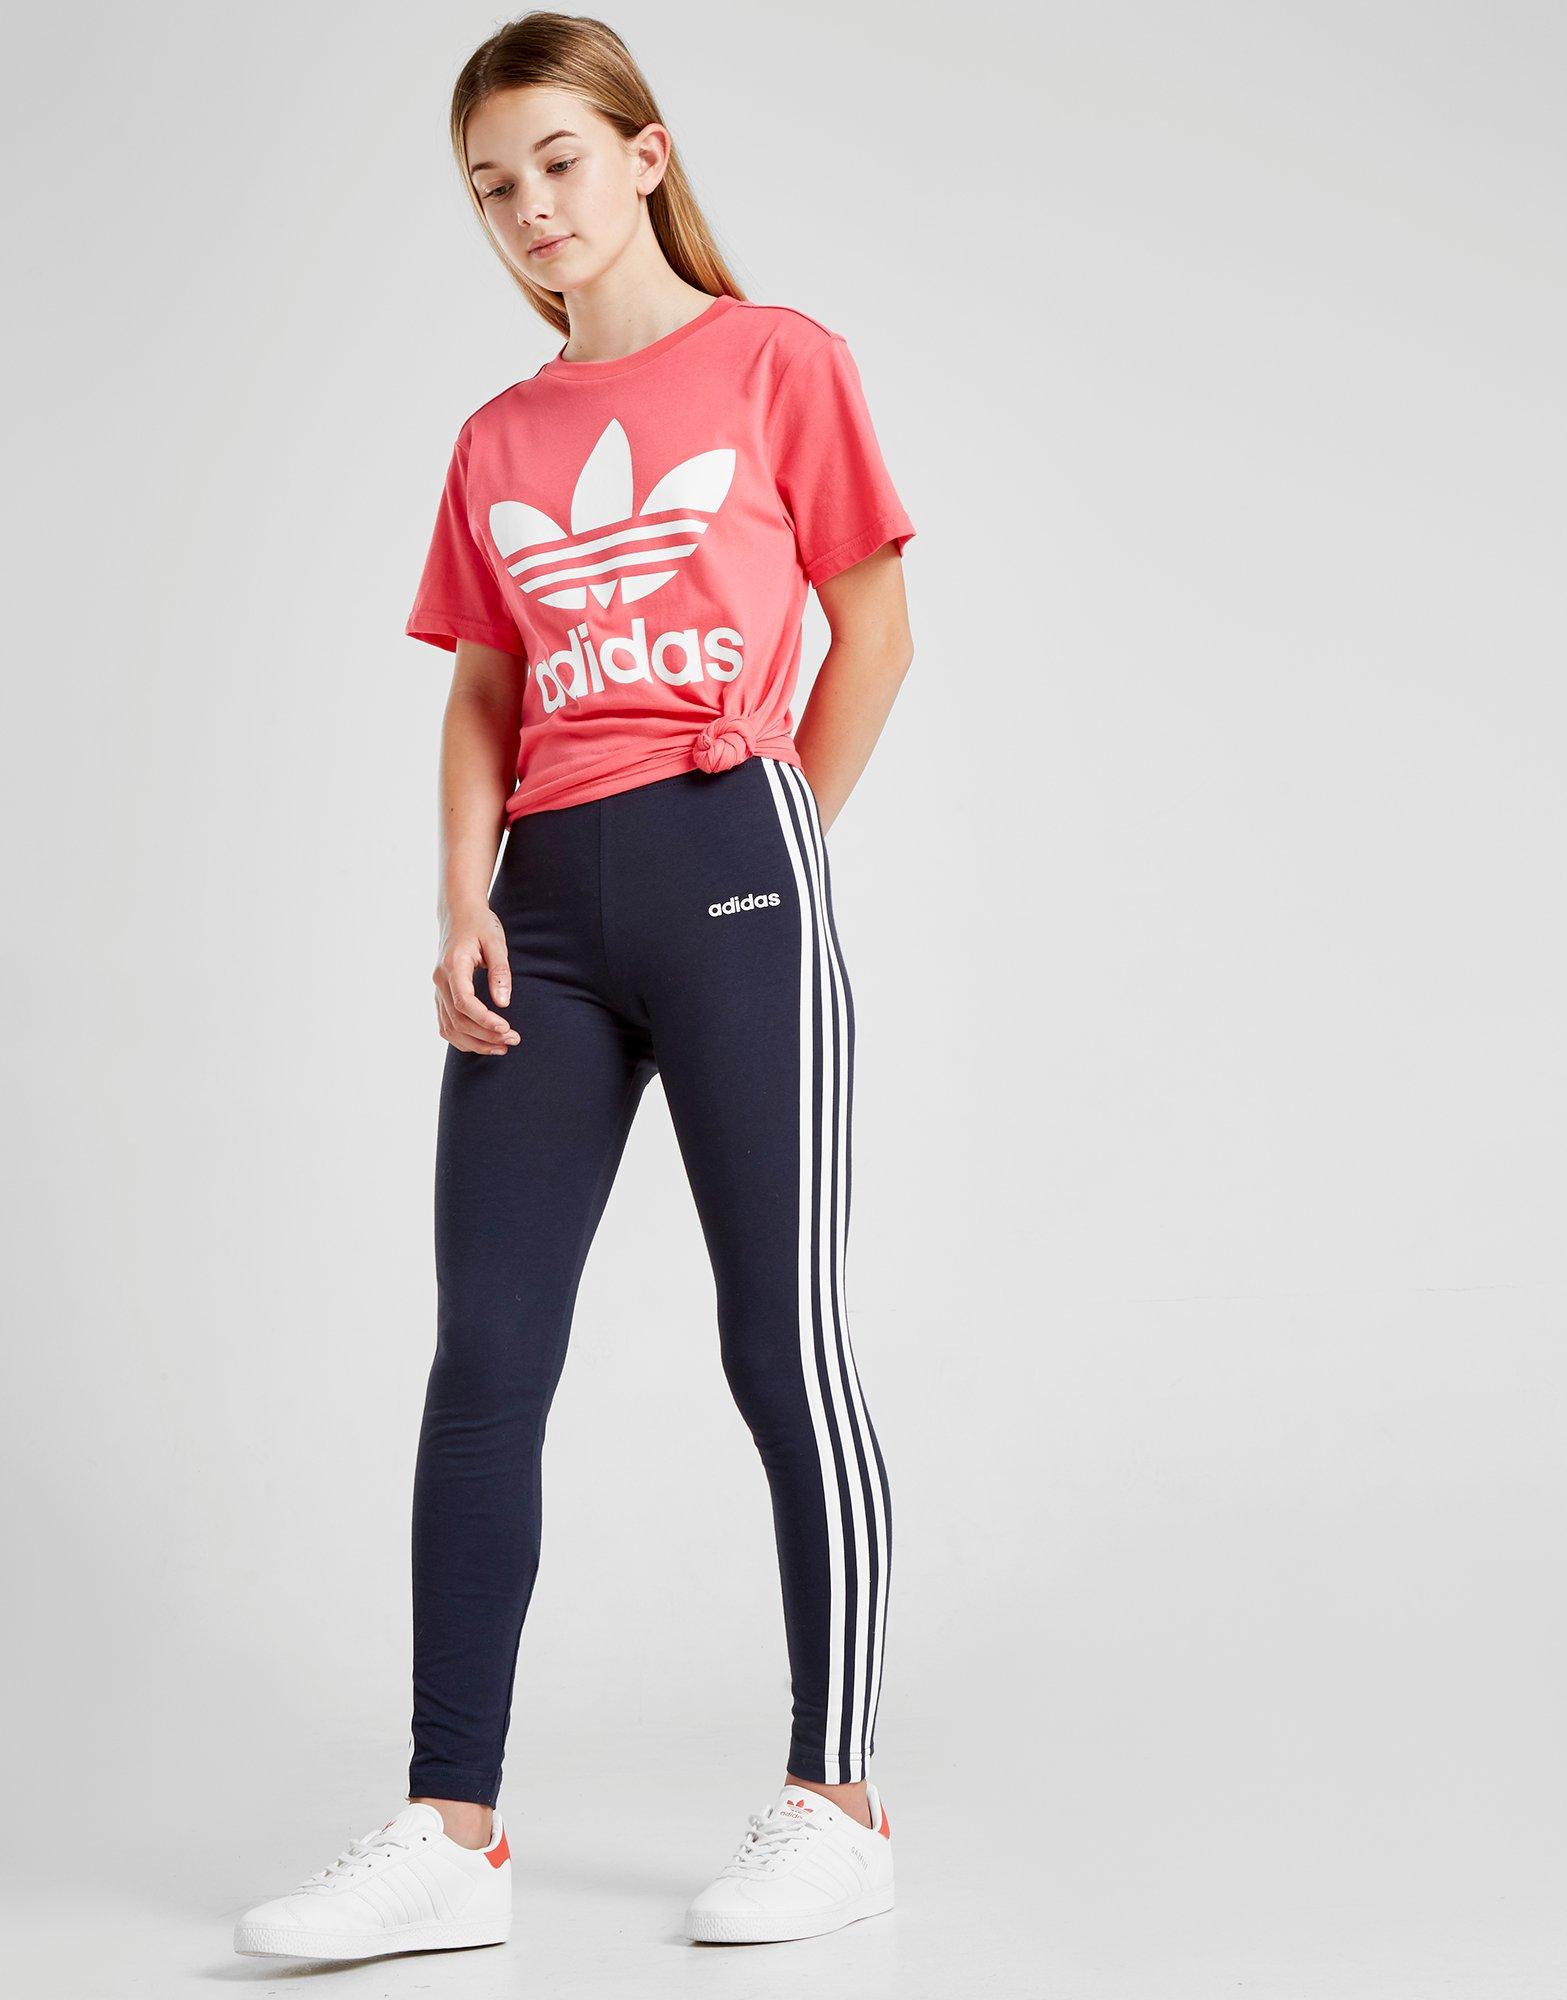 Buy adidas Girls' 3-Stripes Core 